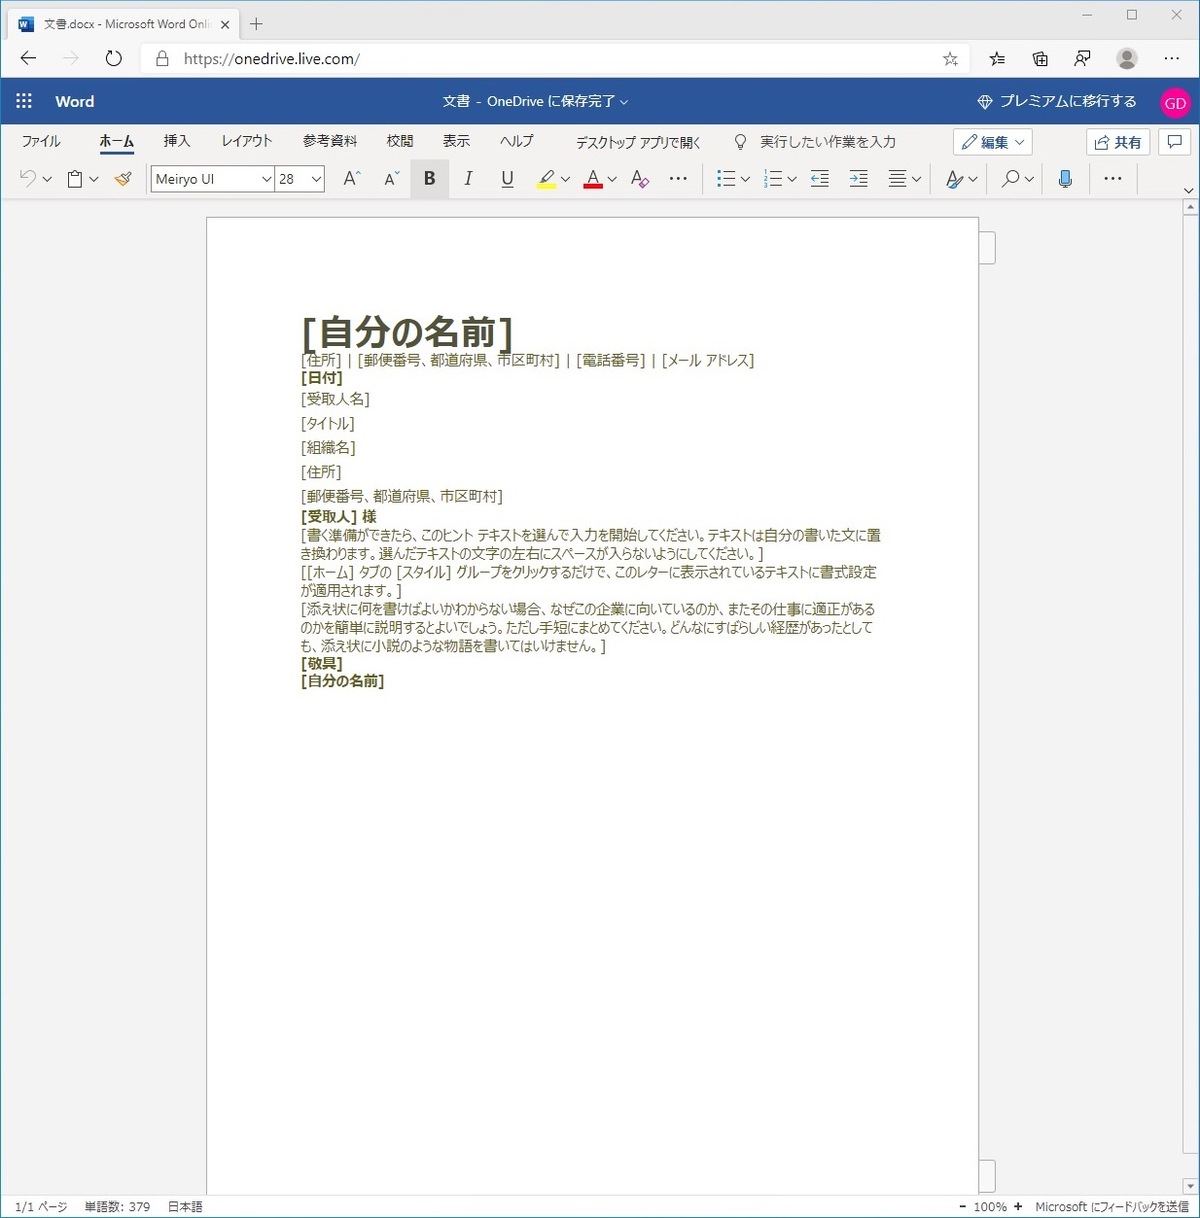 Microsoft Word Online使用サンプル - Windows 10